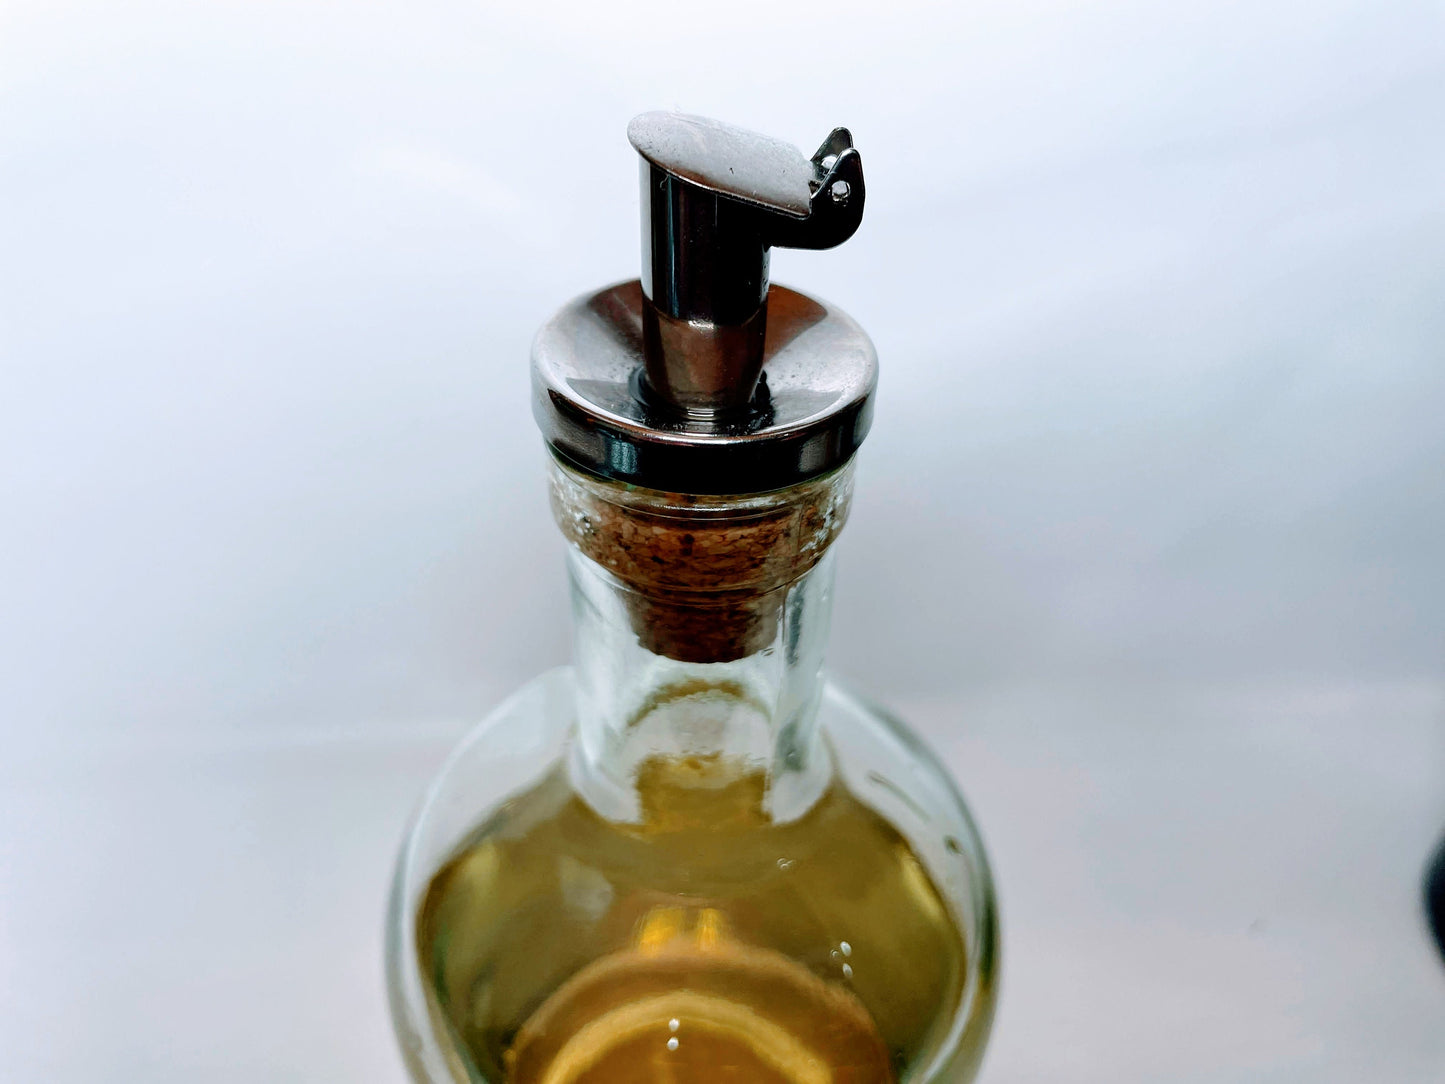 Vinegar &amp; oil dispenser in gin bottles - 500-700ml - With stainless steel dispenser and natural cork - Gin gift upcycling - Kitchen household